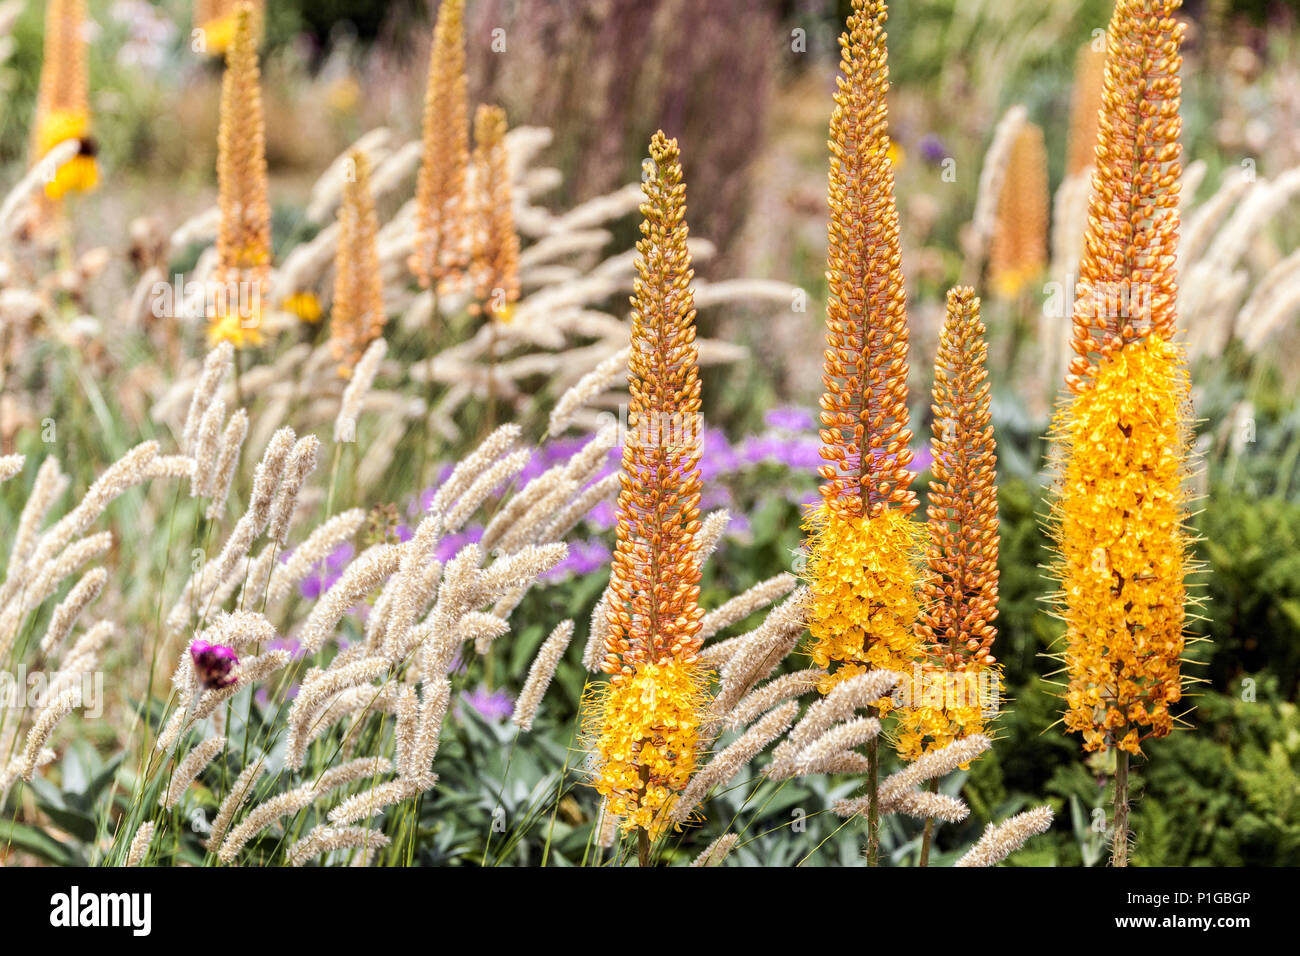 Beautiful garden flowers, Foxtail Lilly, Eremurus Pinocchio, Melic grass Melica transsilvanica, ornamental grasses in full bloom Stock Photo